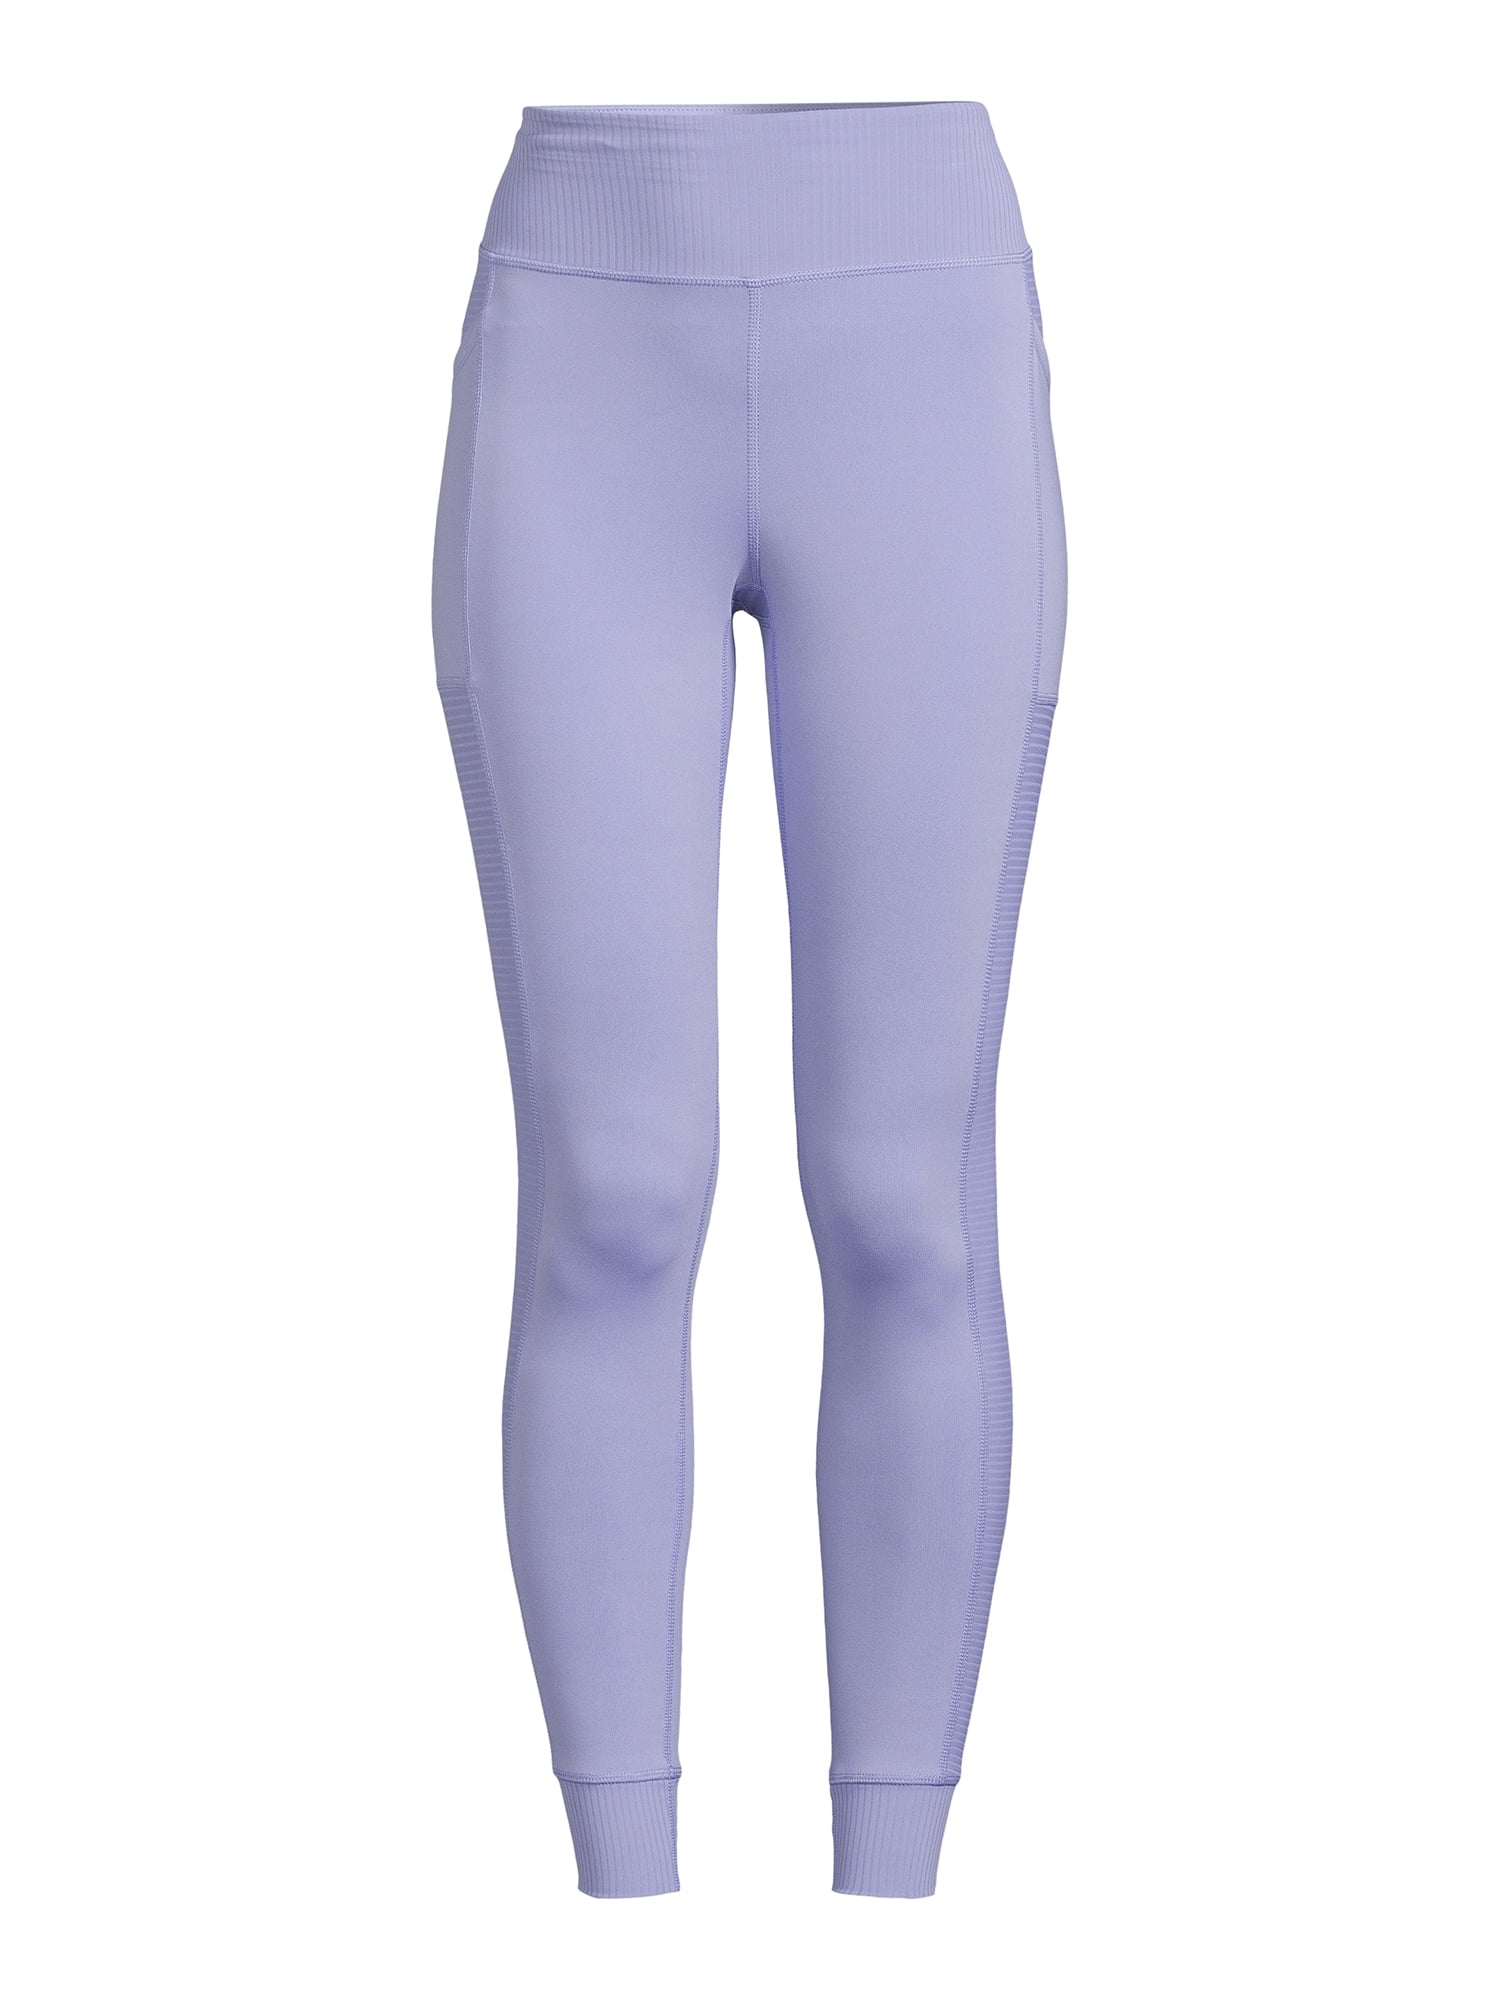 Avia Solid Purple Leggings Workout Athletic Pants  - Depop